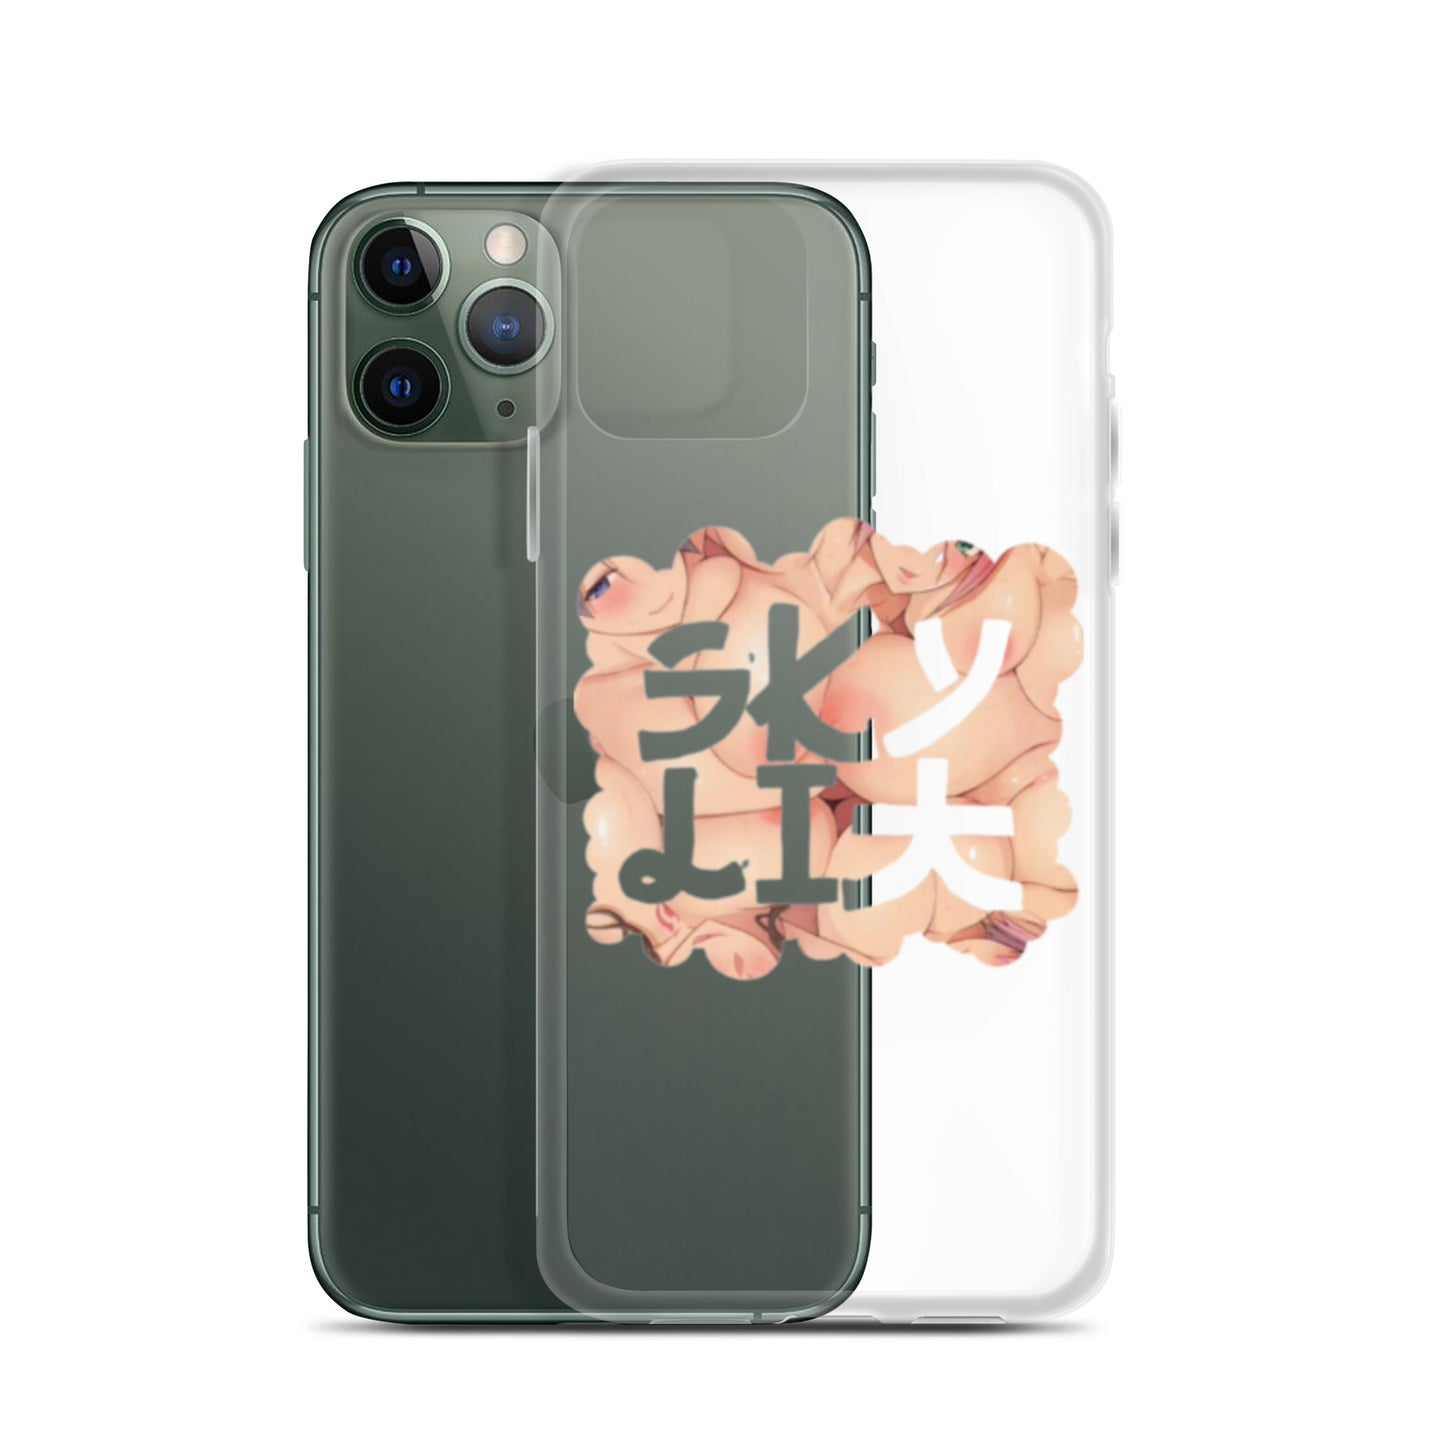 Skylit Anime iPhone Case